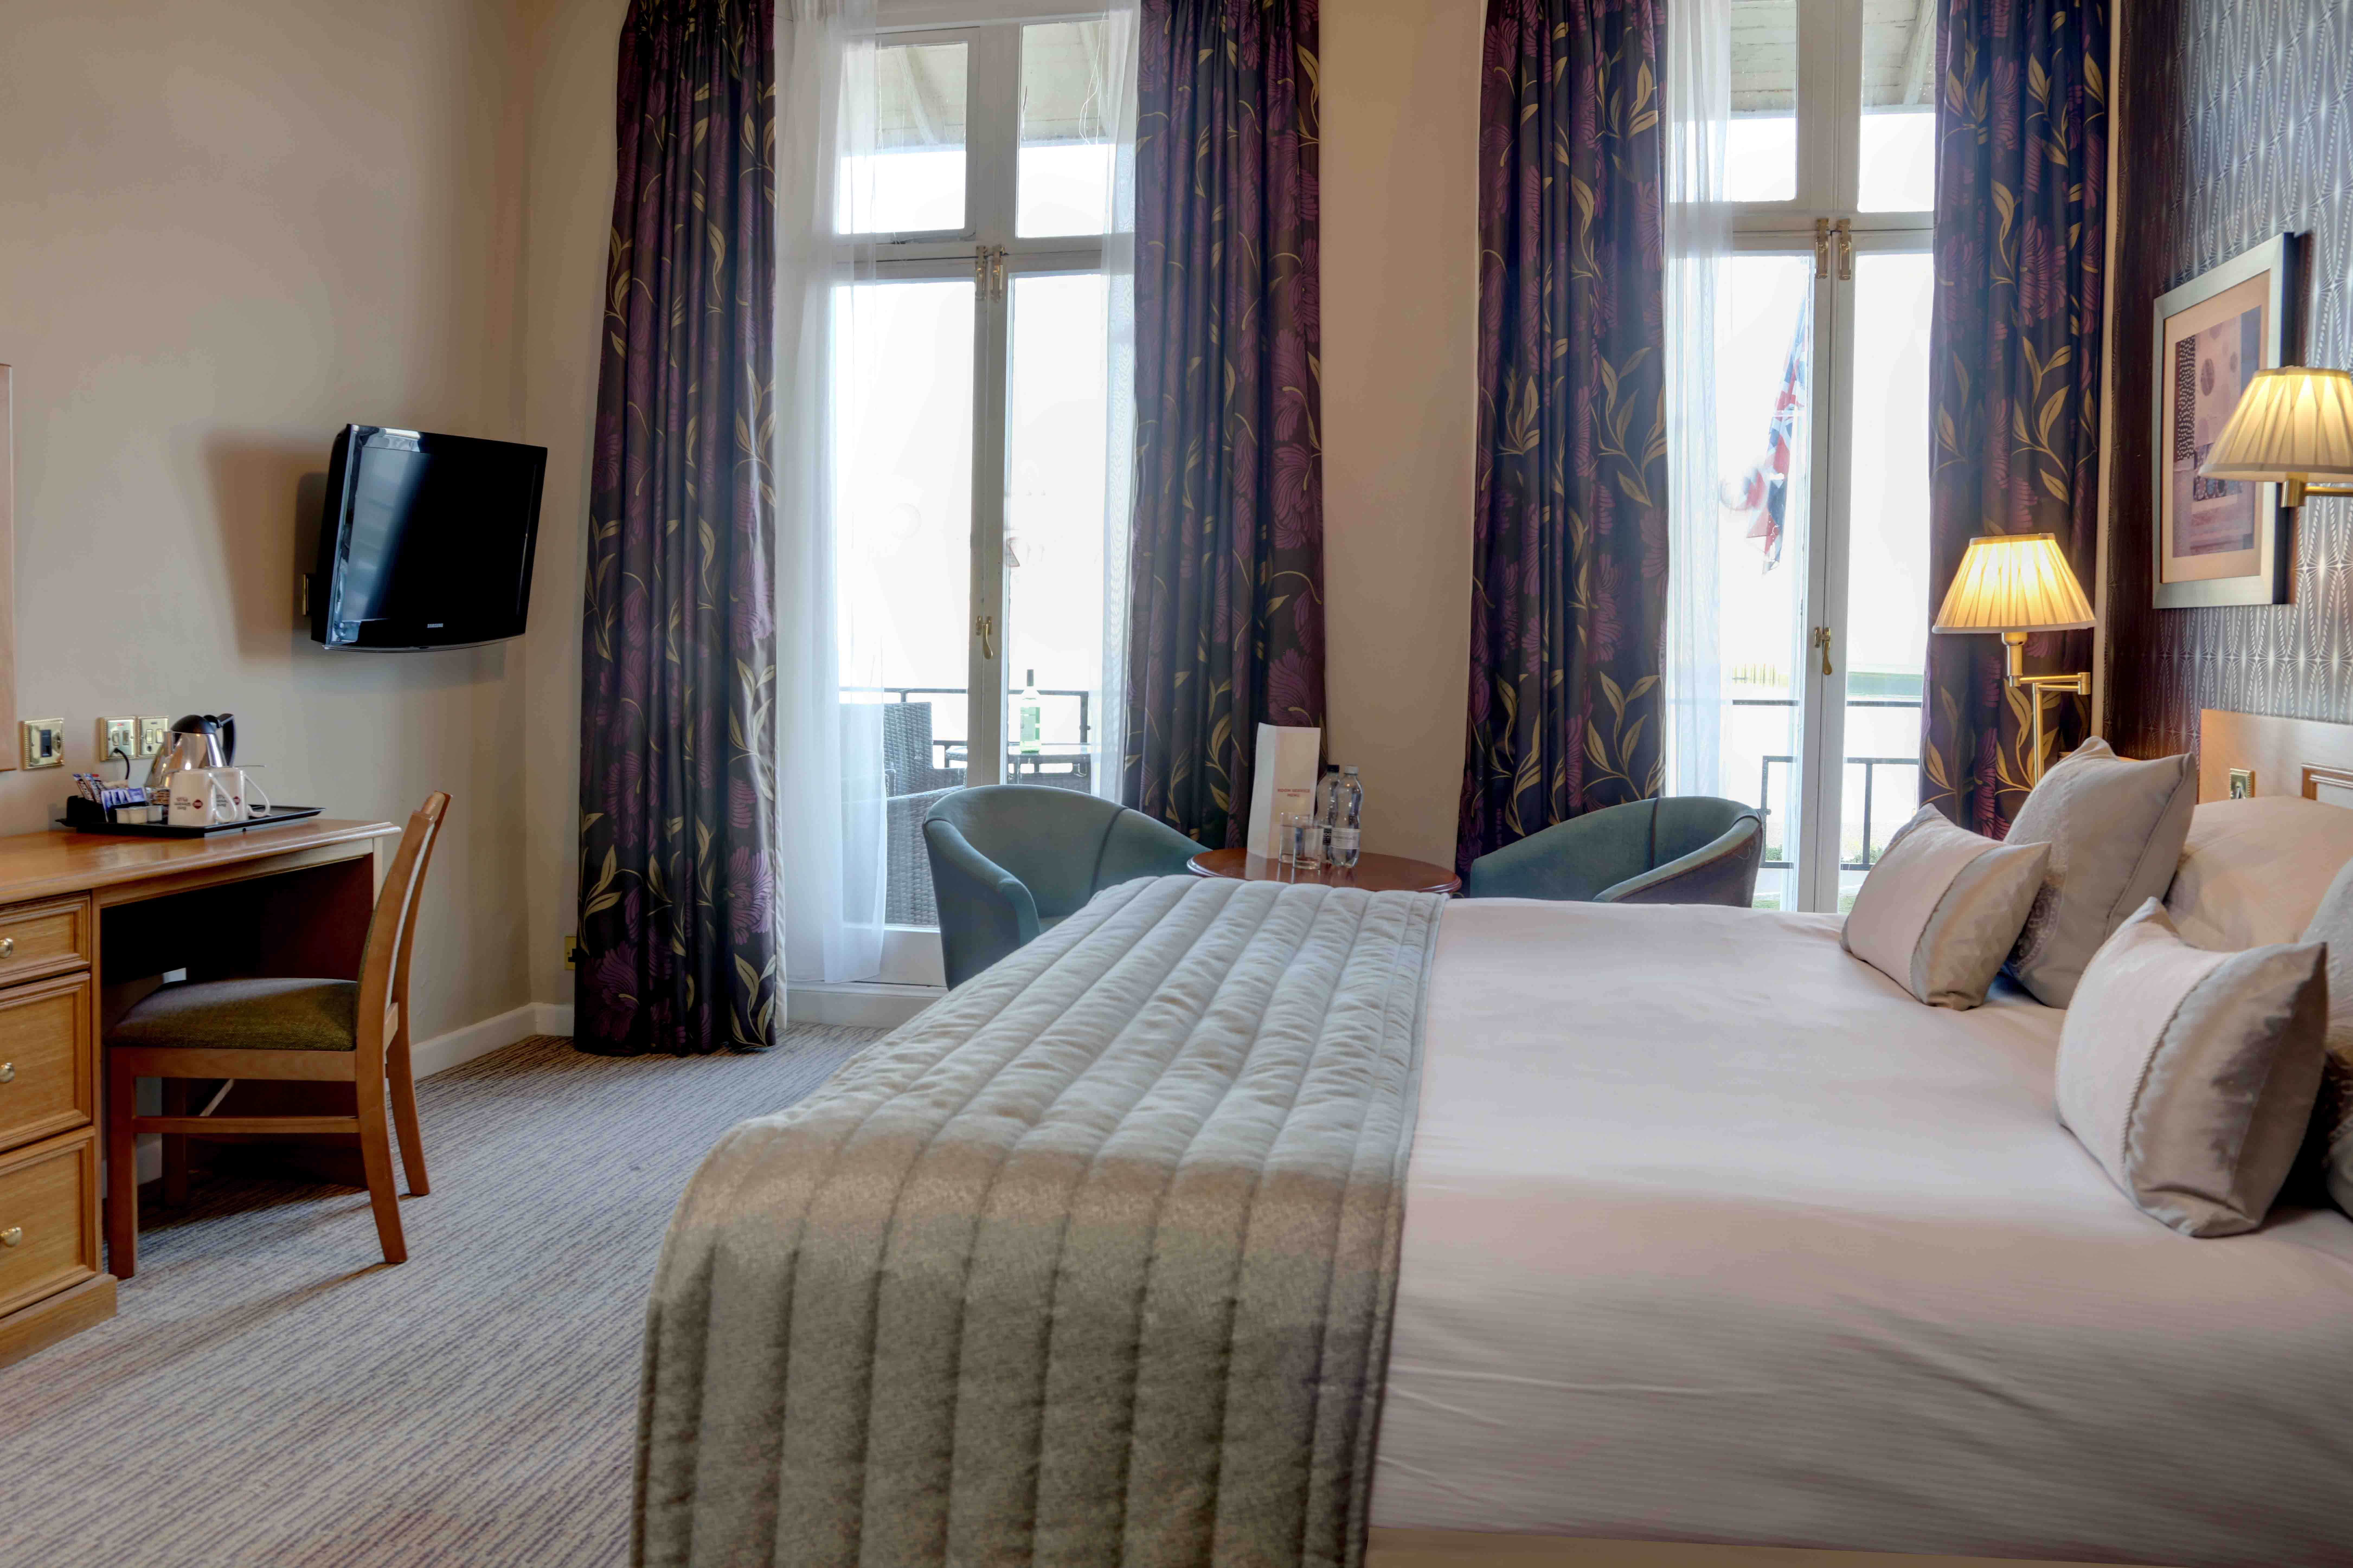 Best Western Premier Dover Marina Hotel & Spa, 4 star hotel, Dover, Kent, bedroom